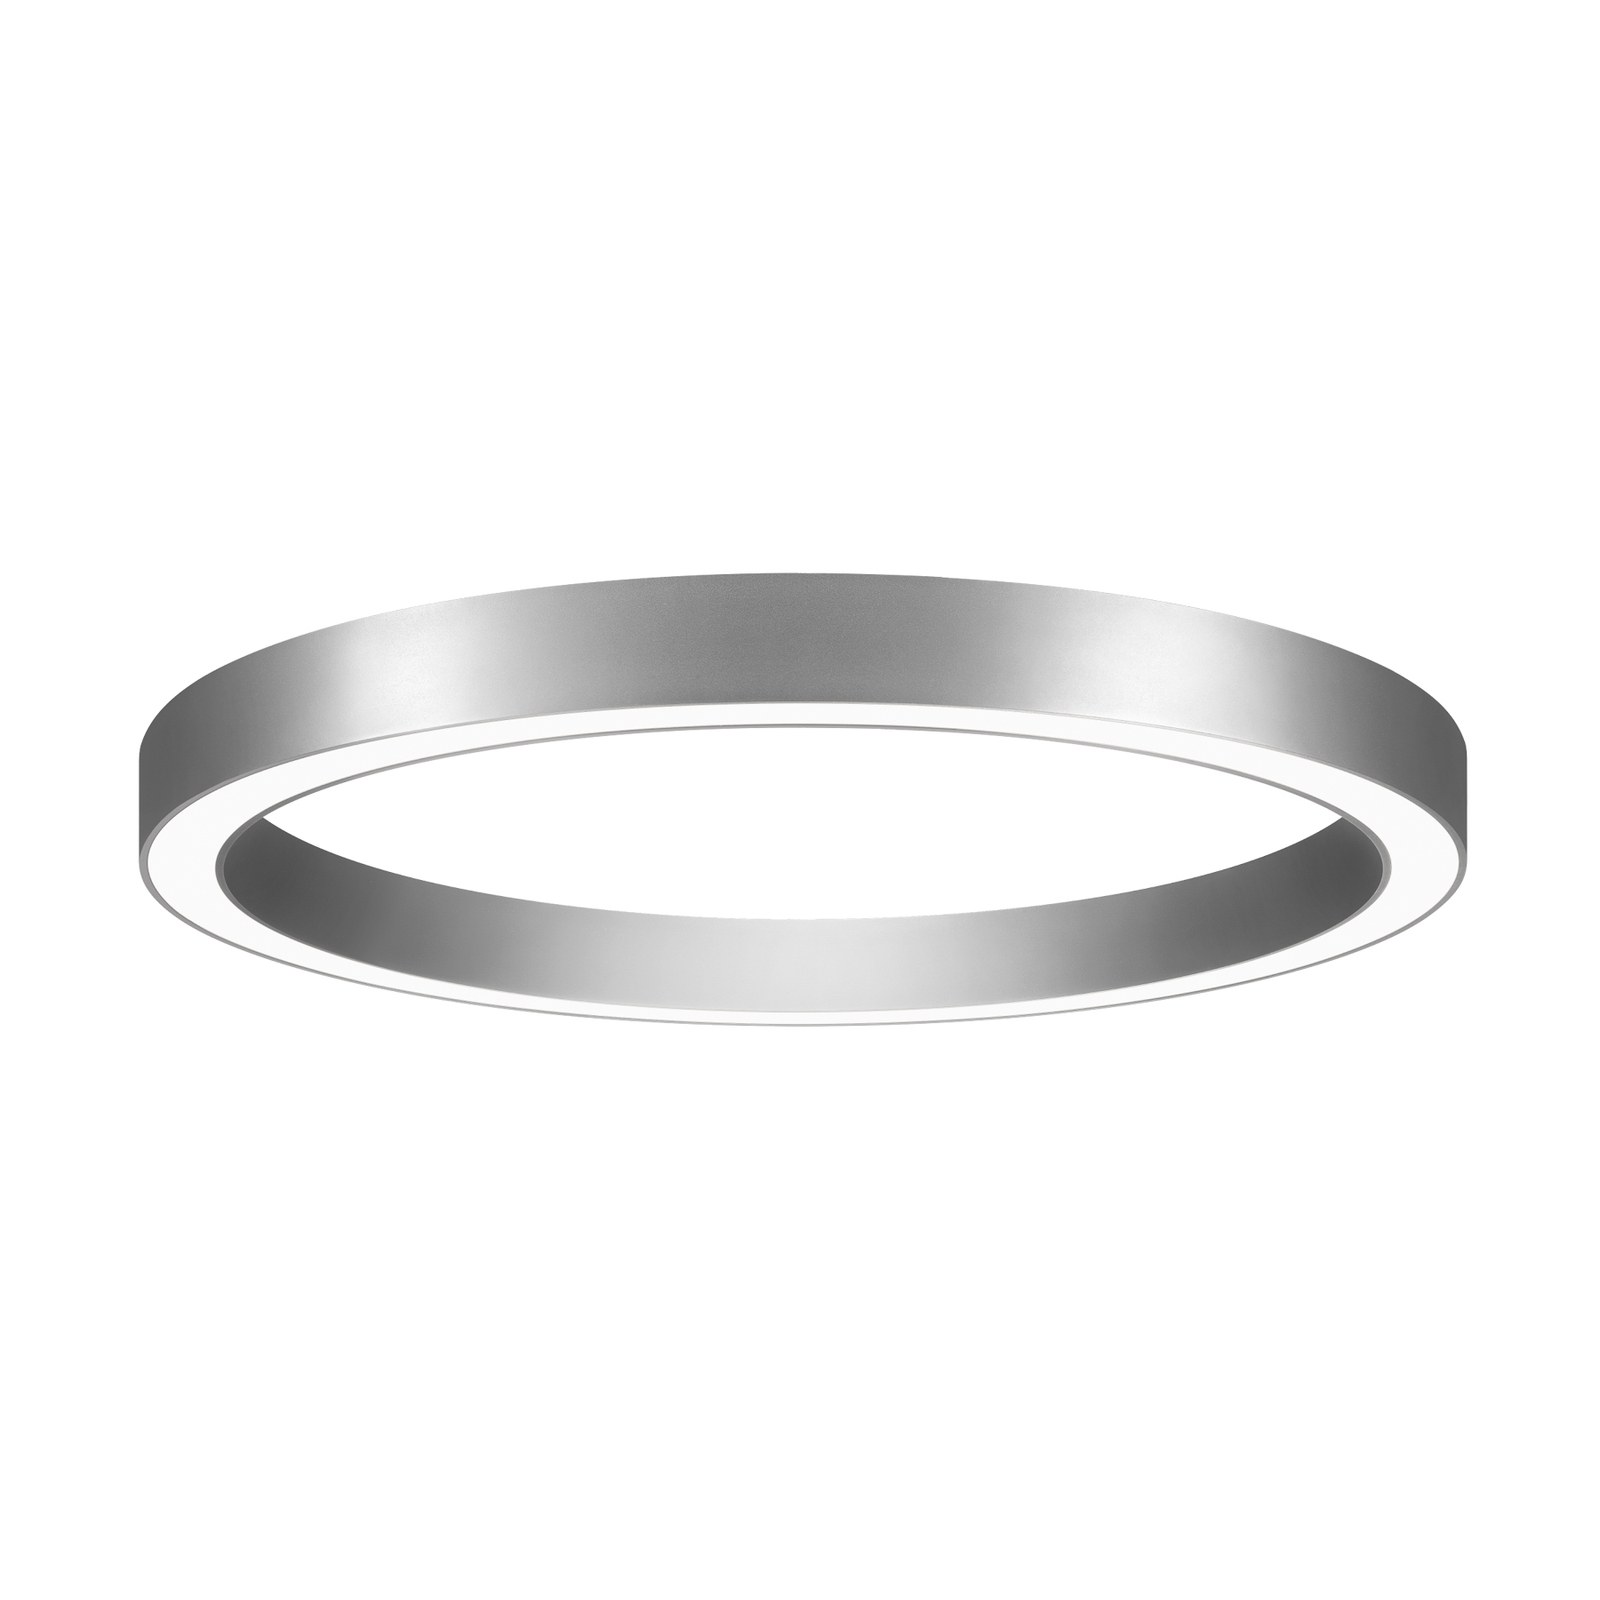 BRUMBERG Biro Circle Ring, Ø 60 cm, Casambi, sølv, 840